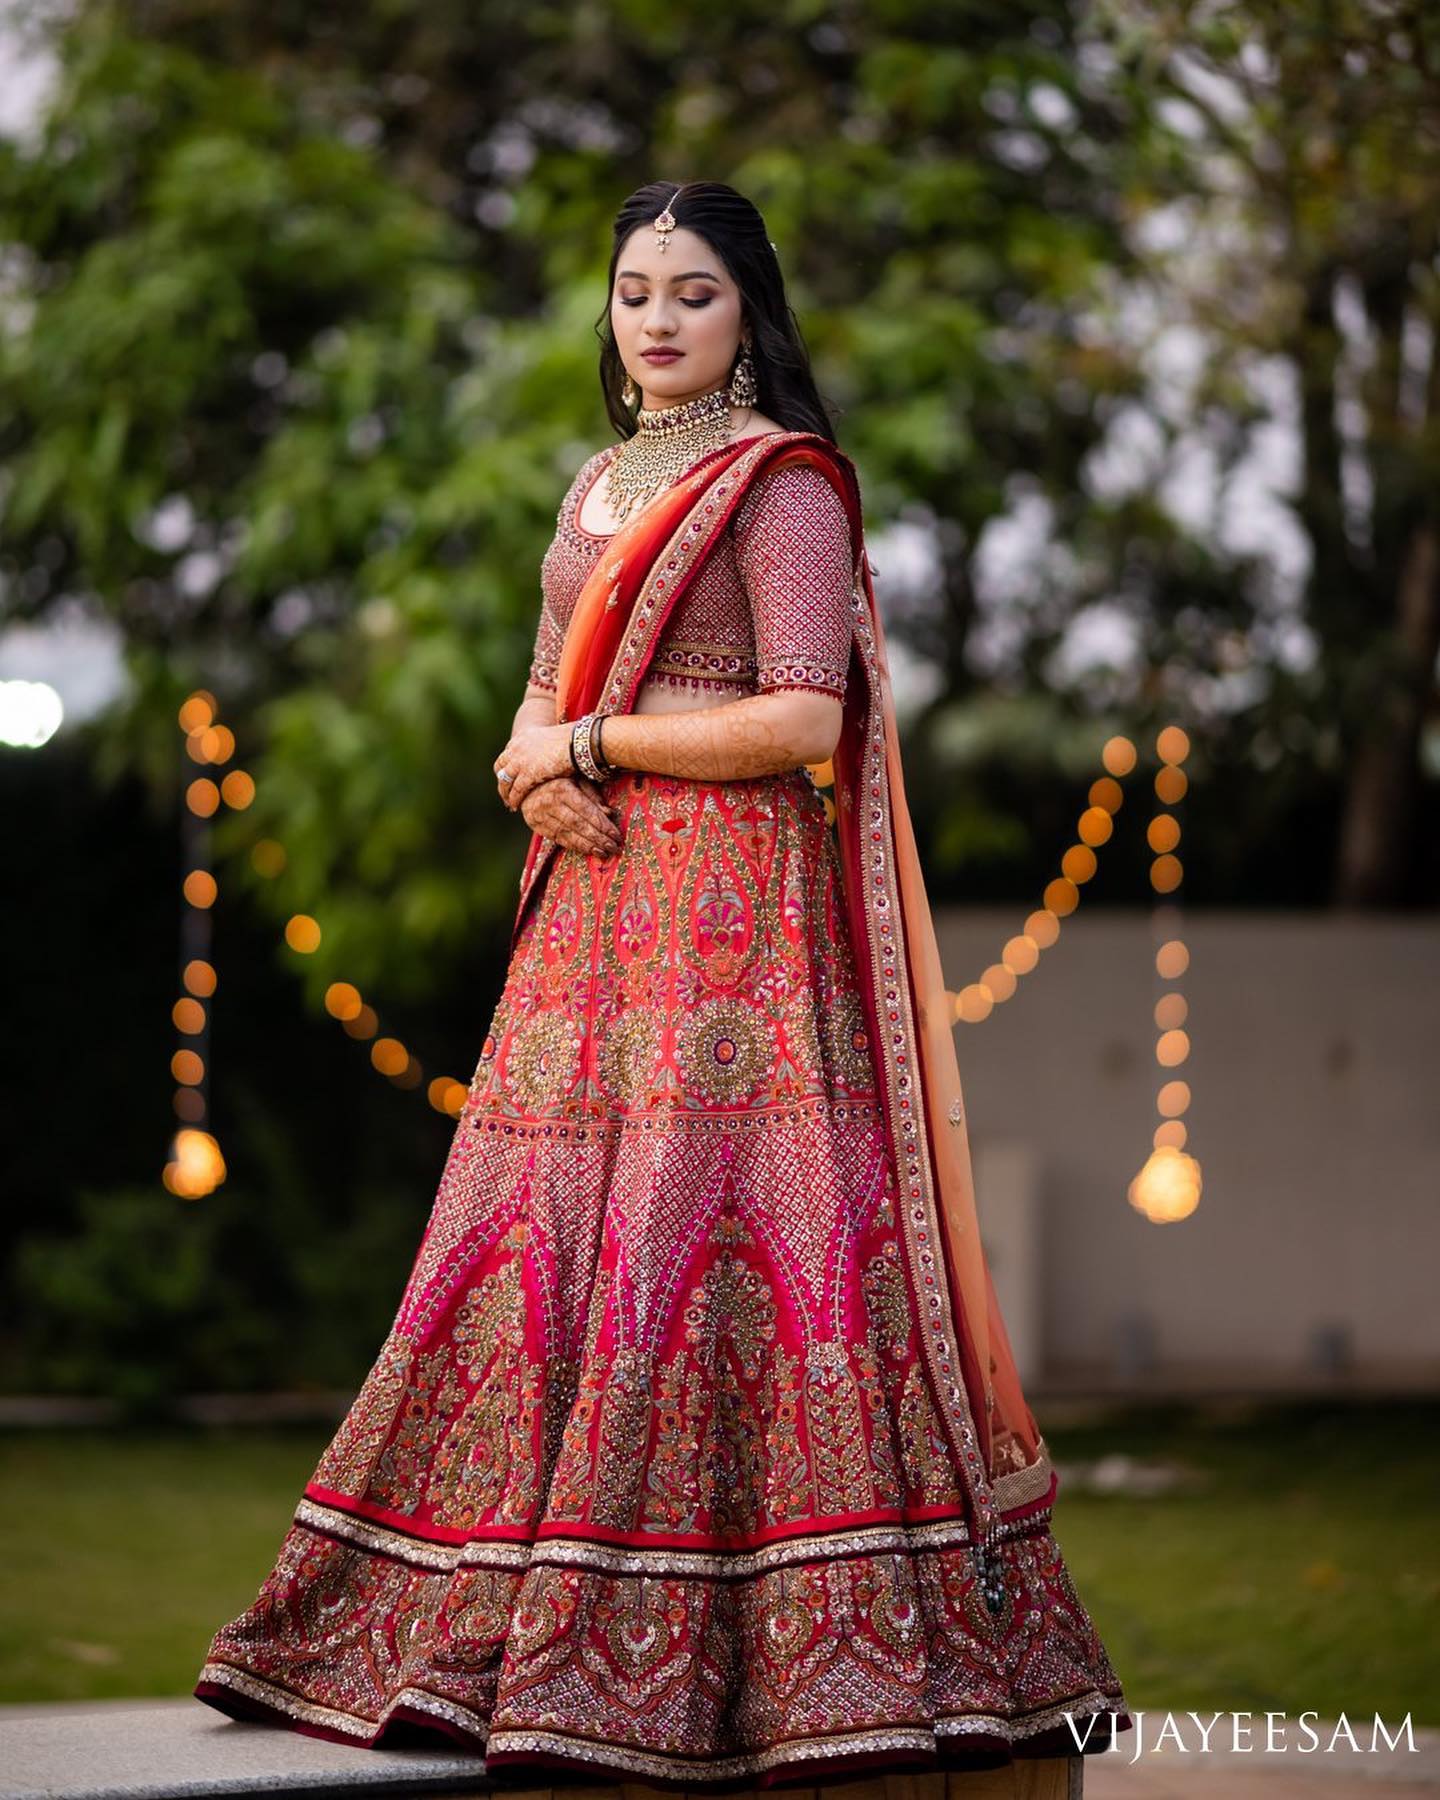 Arjun's Karla wearing a ruddy red lehenga, these pictures full of  simplicity are more beautiful than Alia-Ranbir's wedding - informalnewz